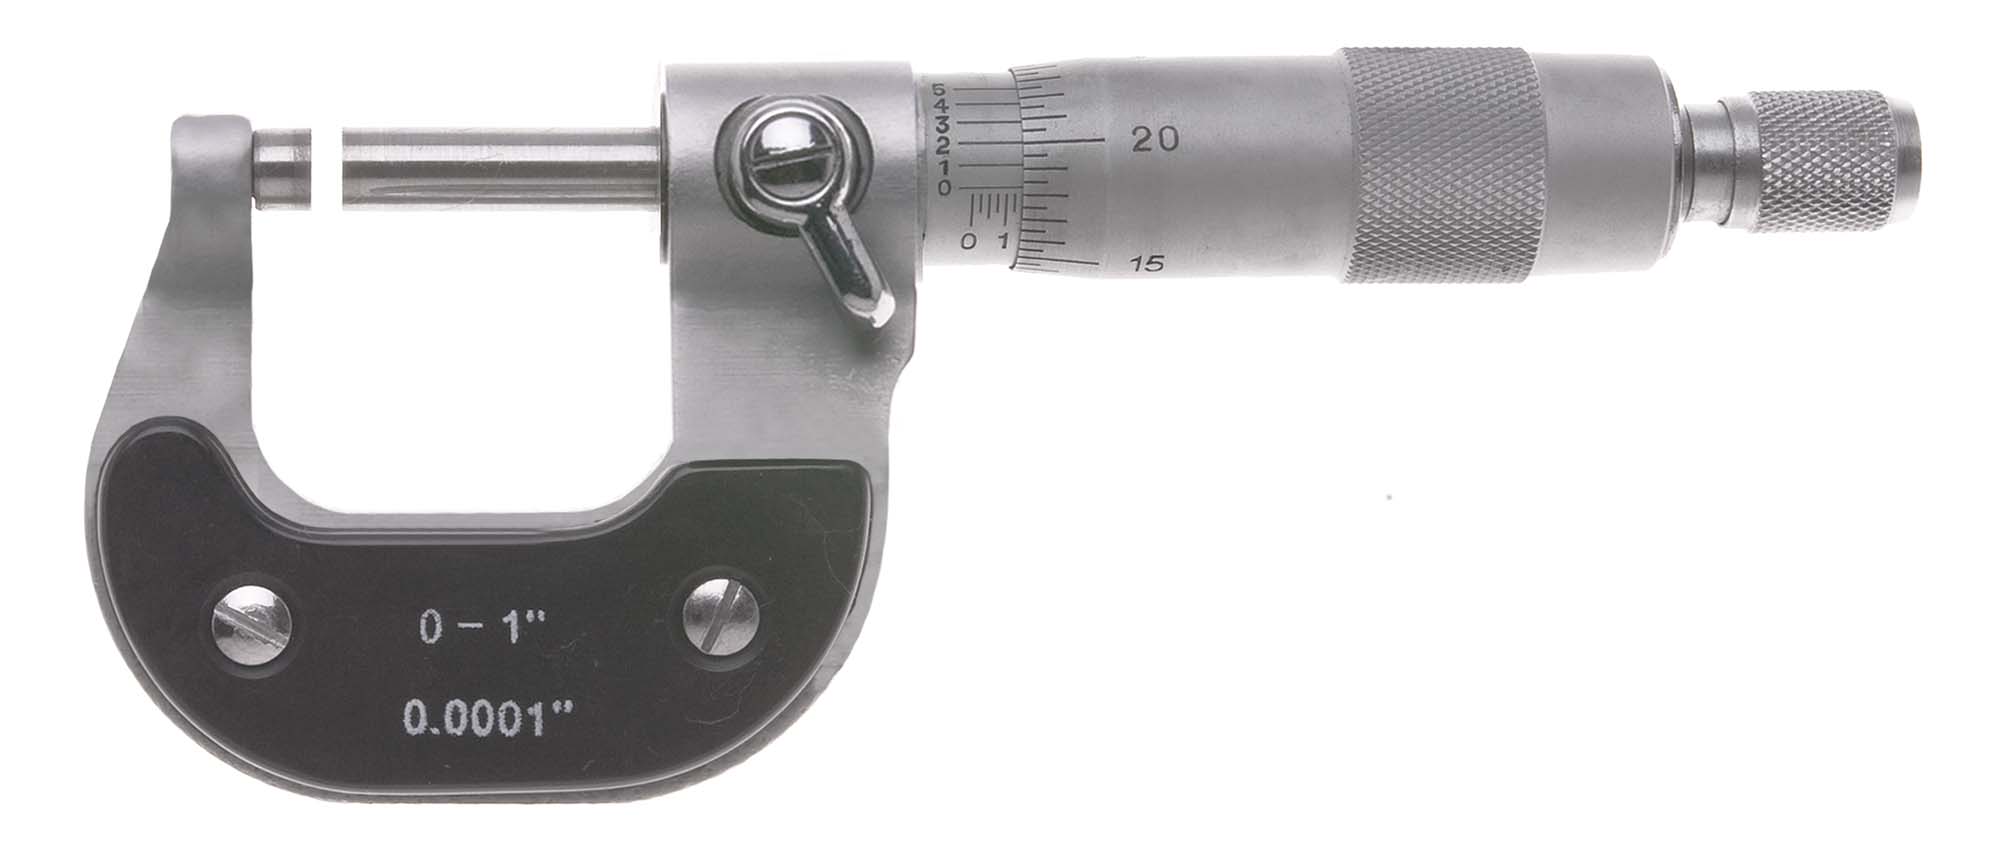 VME-06  5-6" VME Outside Micrometer, .0001"